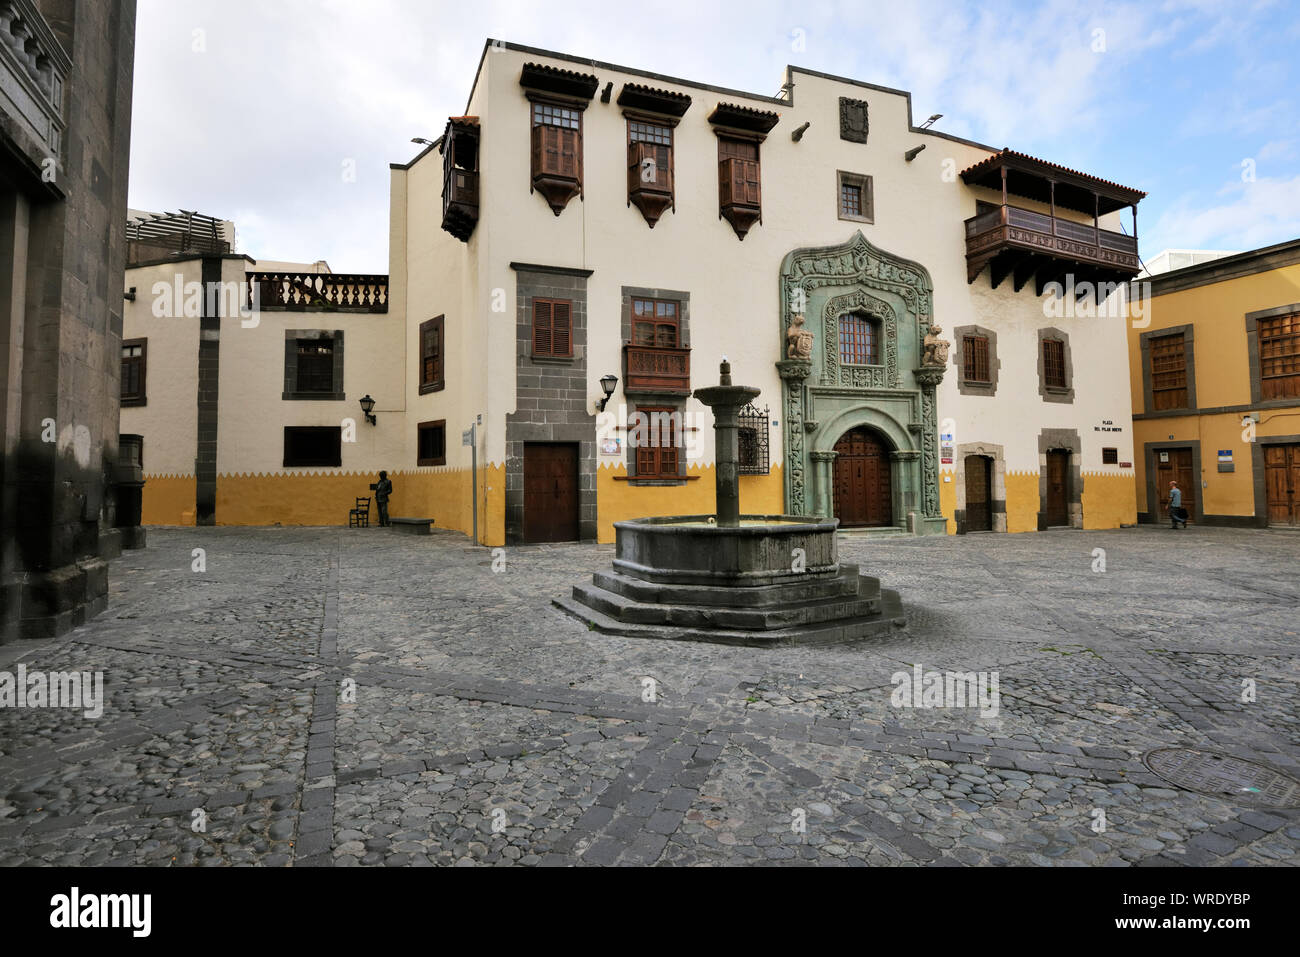 Casa de Colon (Columbus House), 16th century. Las Palmas de Gran Canaria, Canary islands. Spain Stock Photo